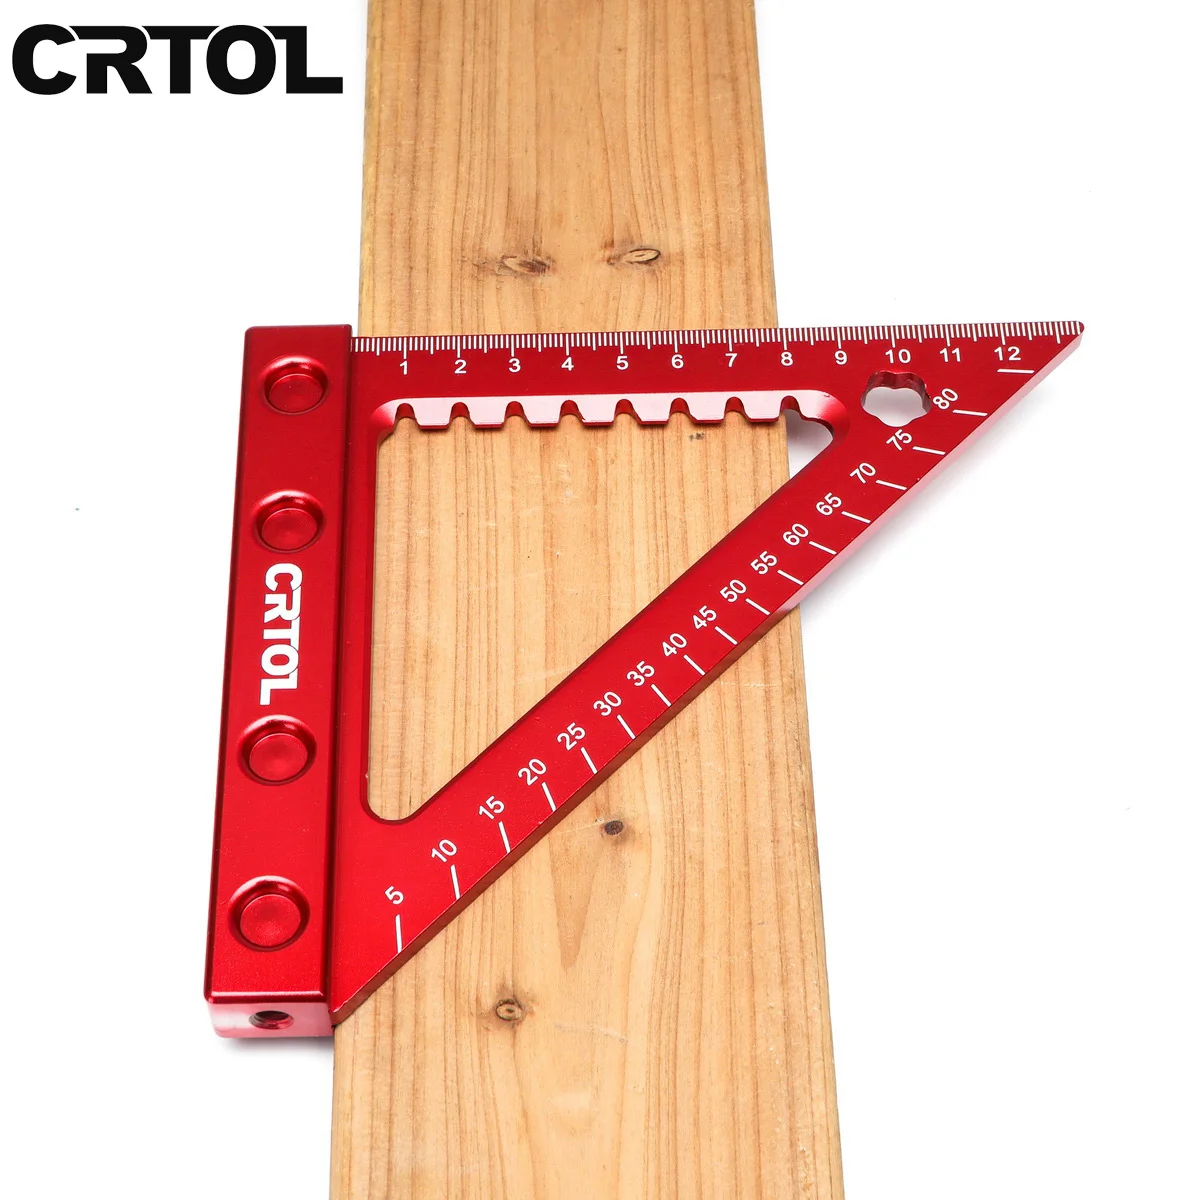 CRTOL 6-inch 90 Degree Metric Angle Ruler Aluminium Alloy Carpenters Square Triangle Ruler DIY Woodworking Tool